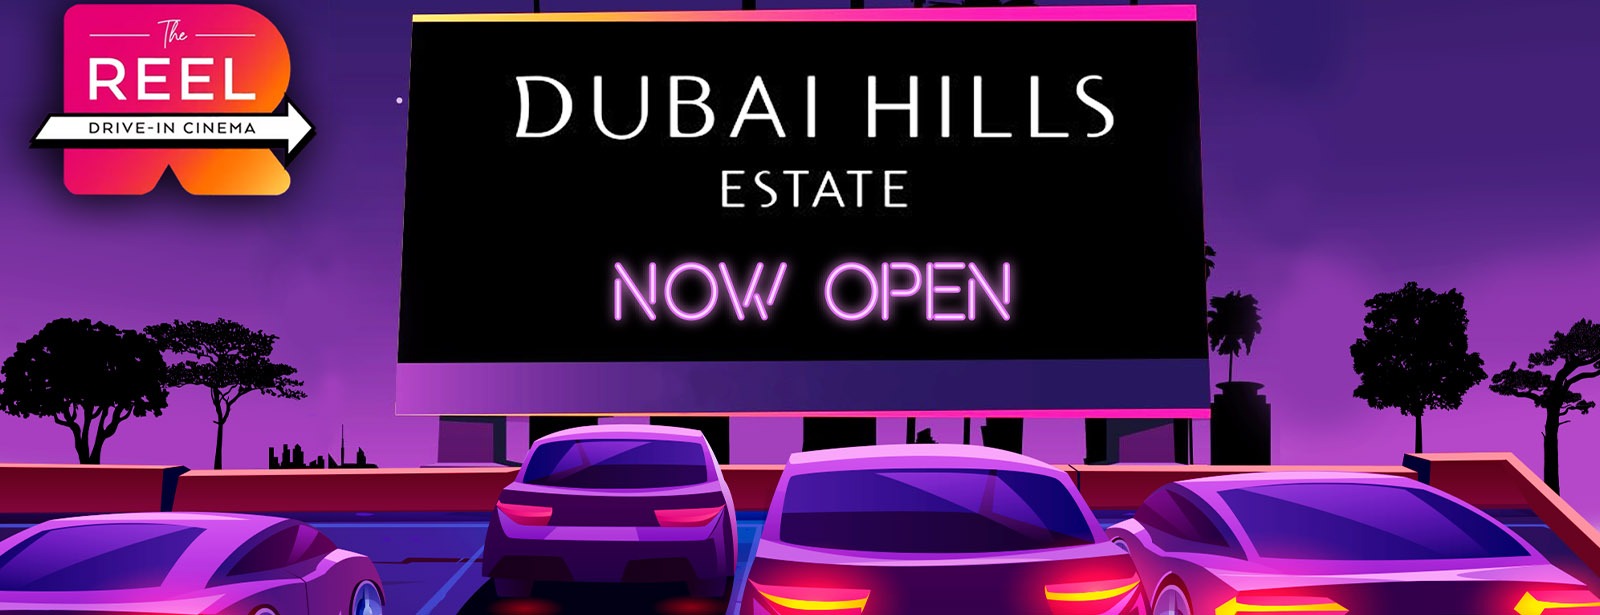 Dubai Hills Estate Drive-In Cinema - Coming Soon in UAE